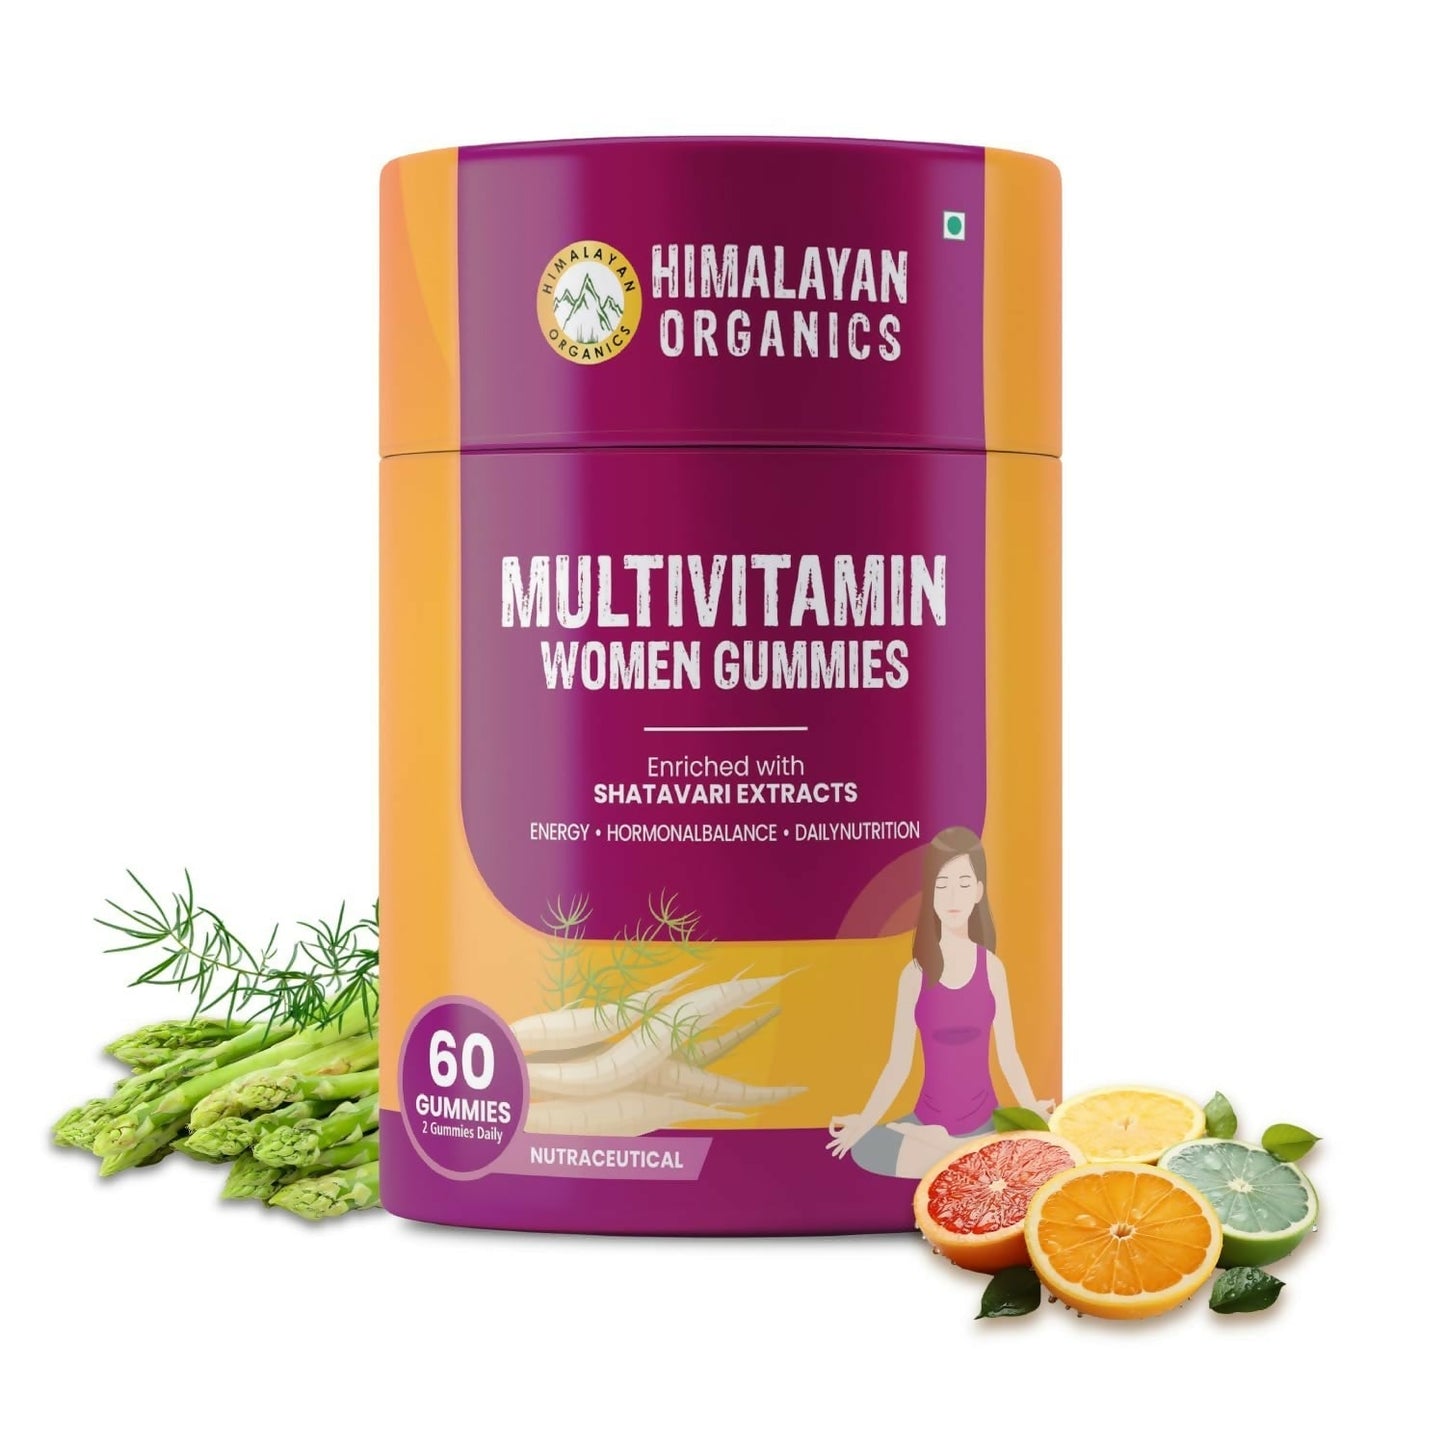 Himalayan Organics Multivitamin Women Gummies